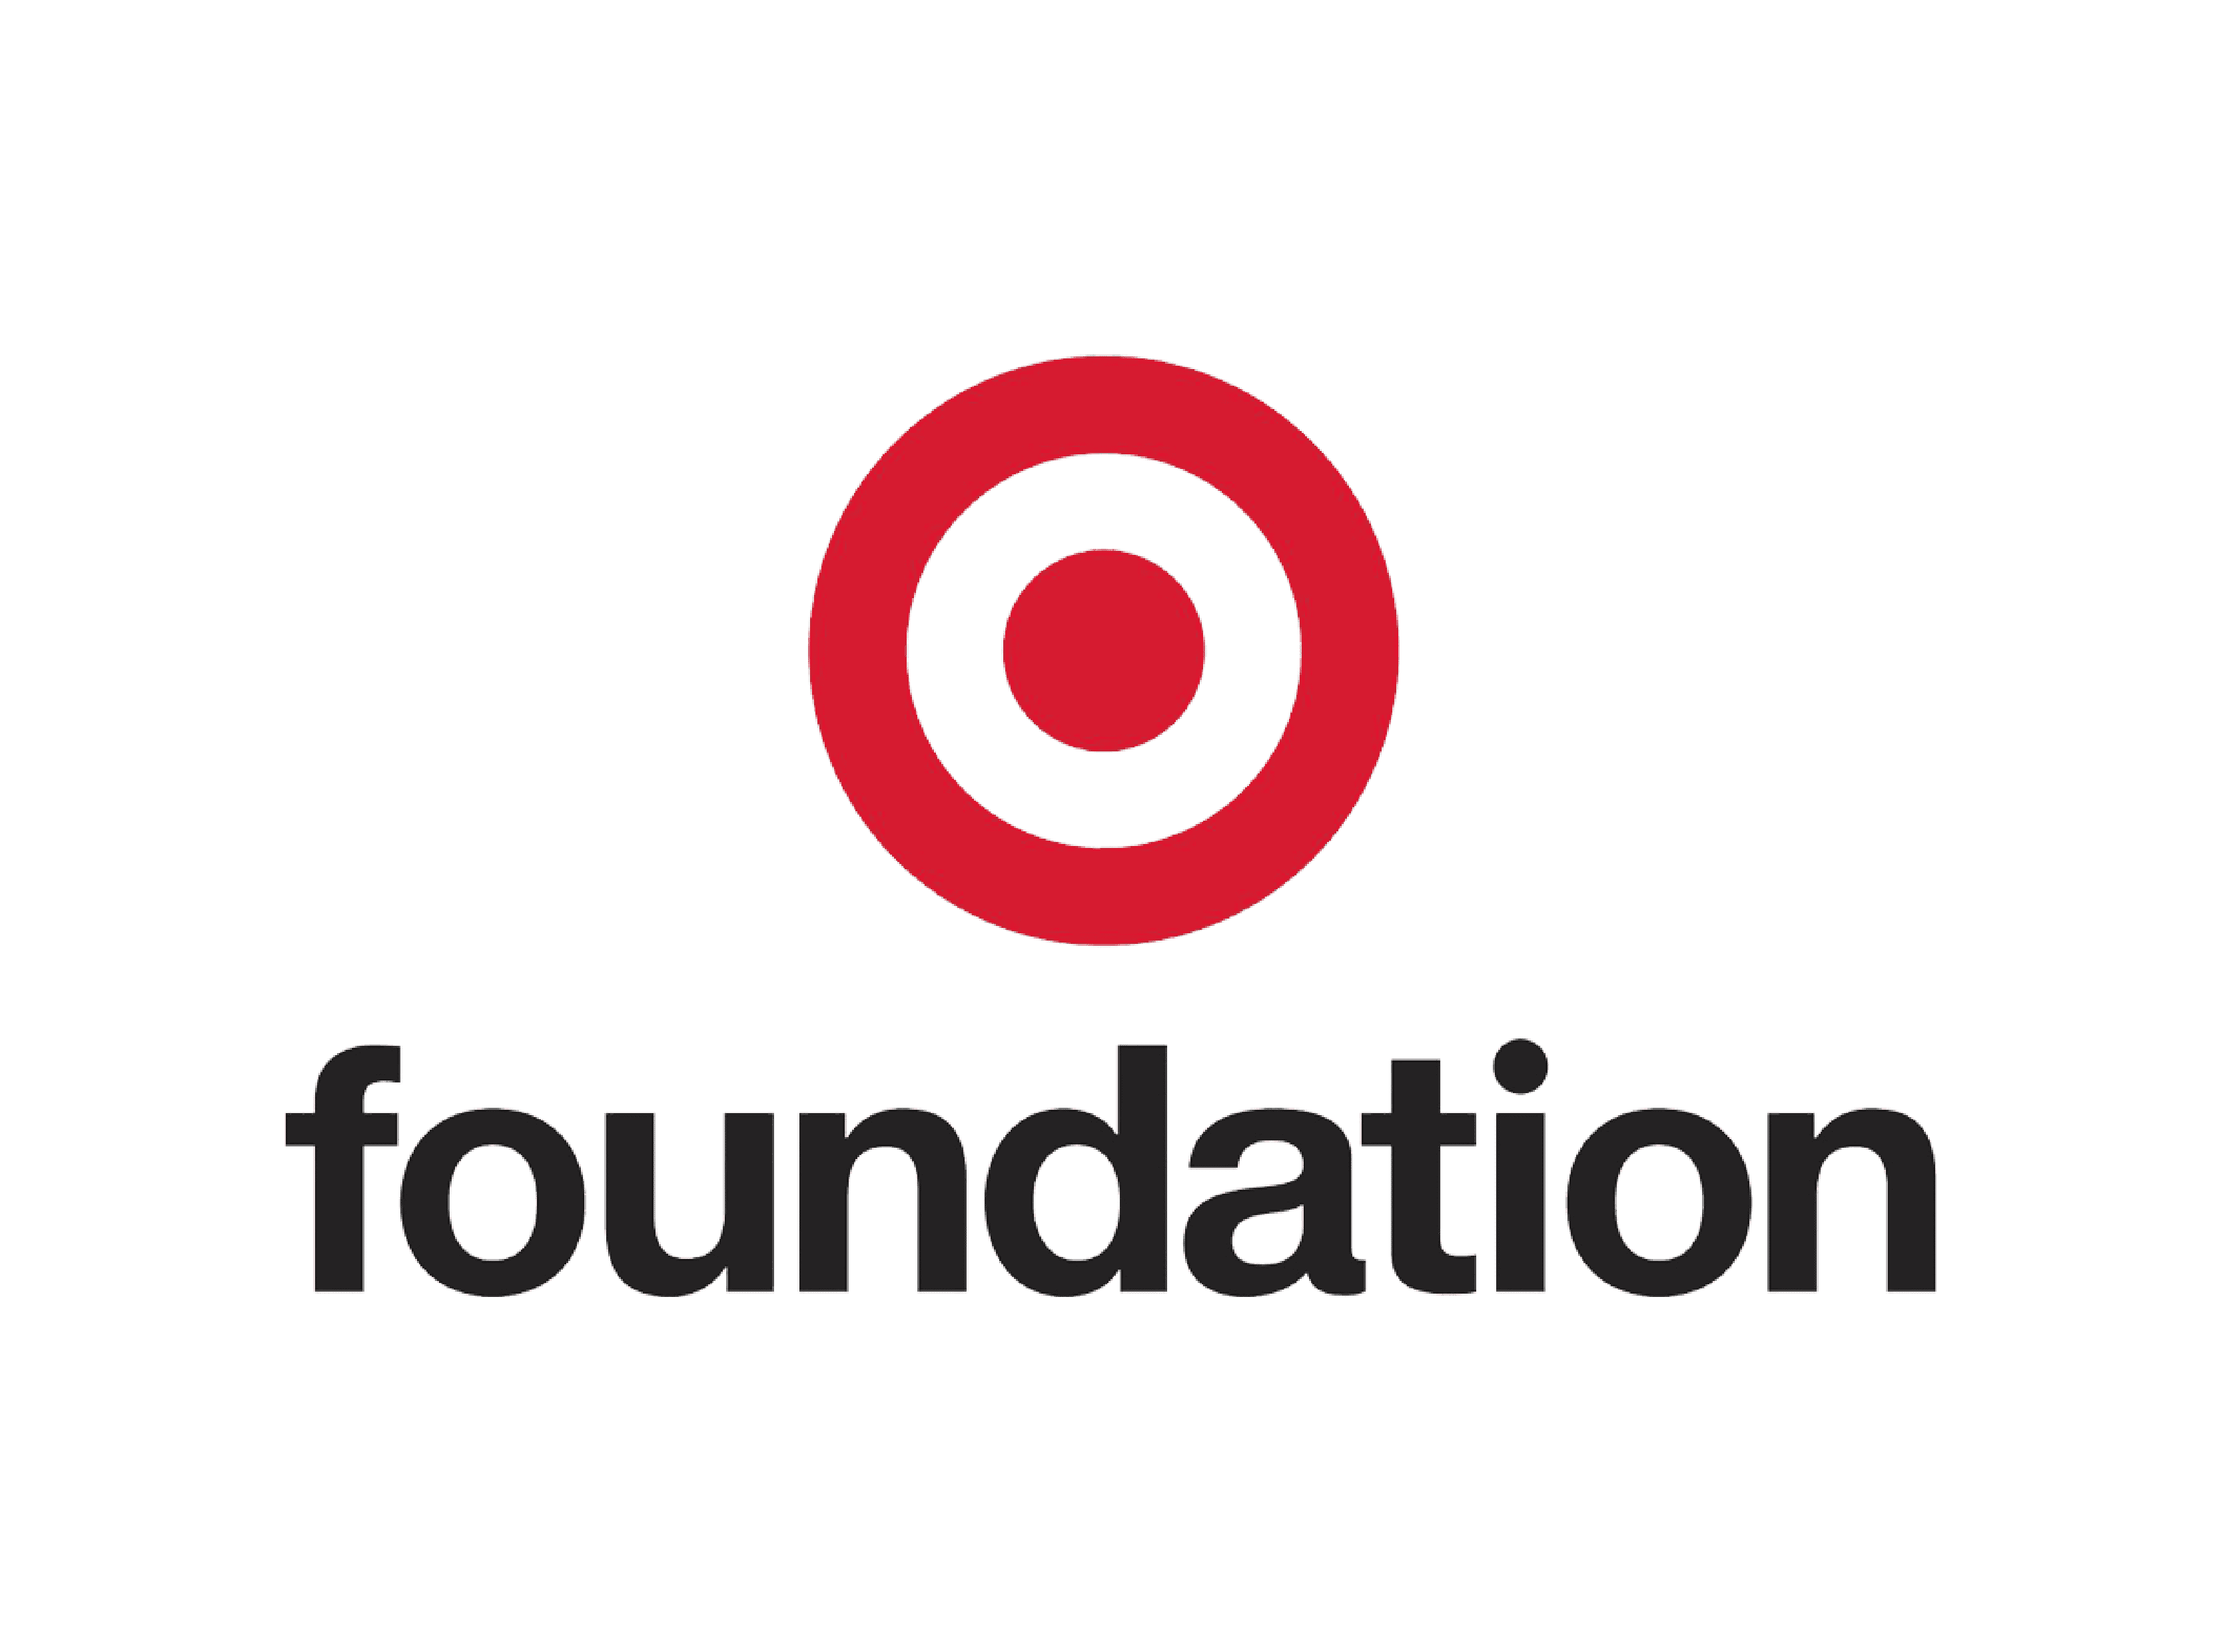 Target Foundation